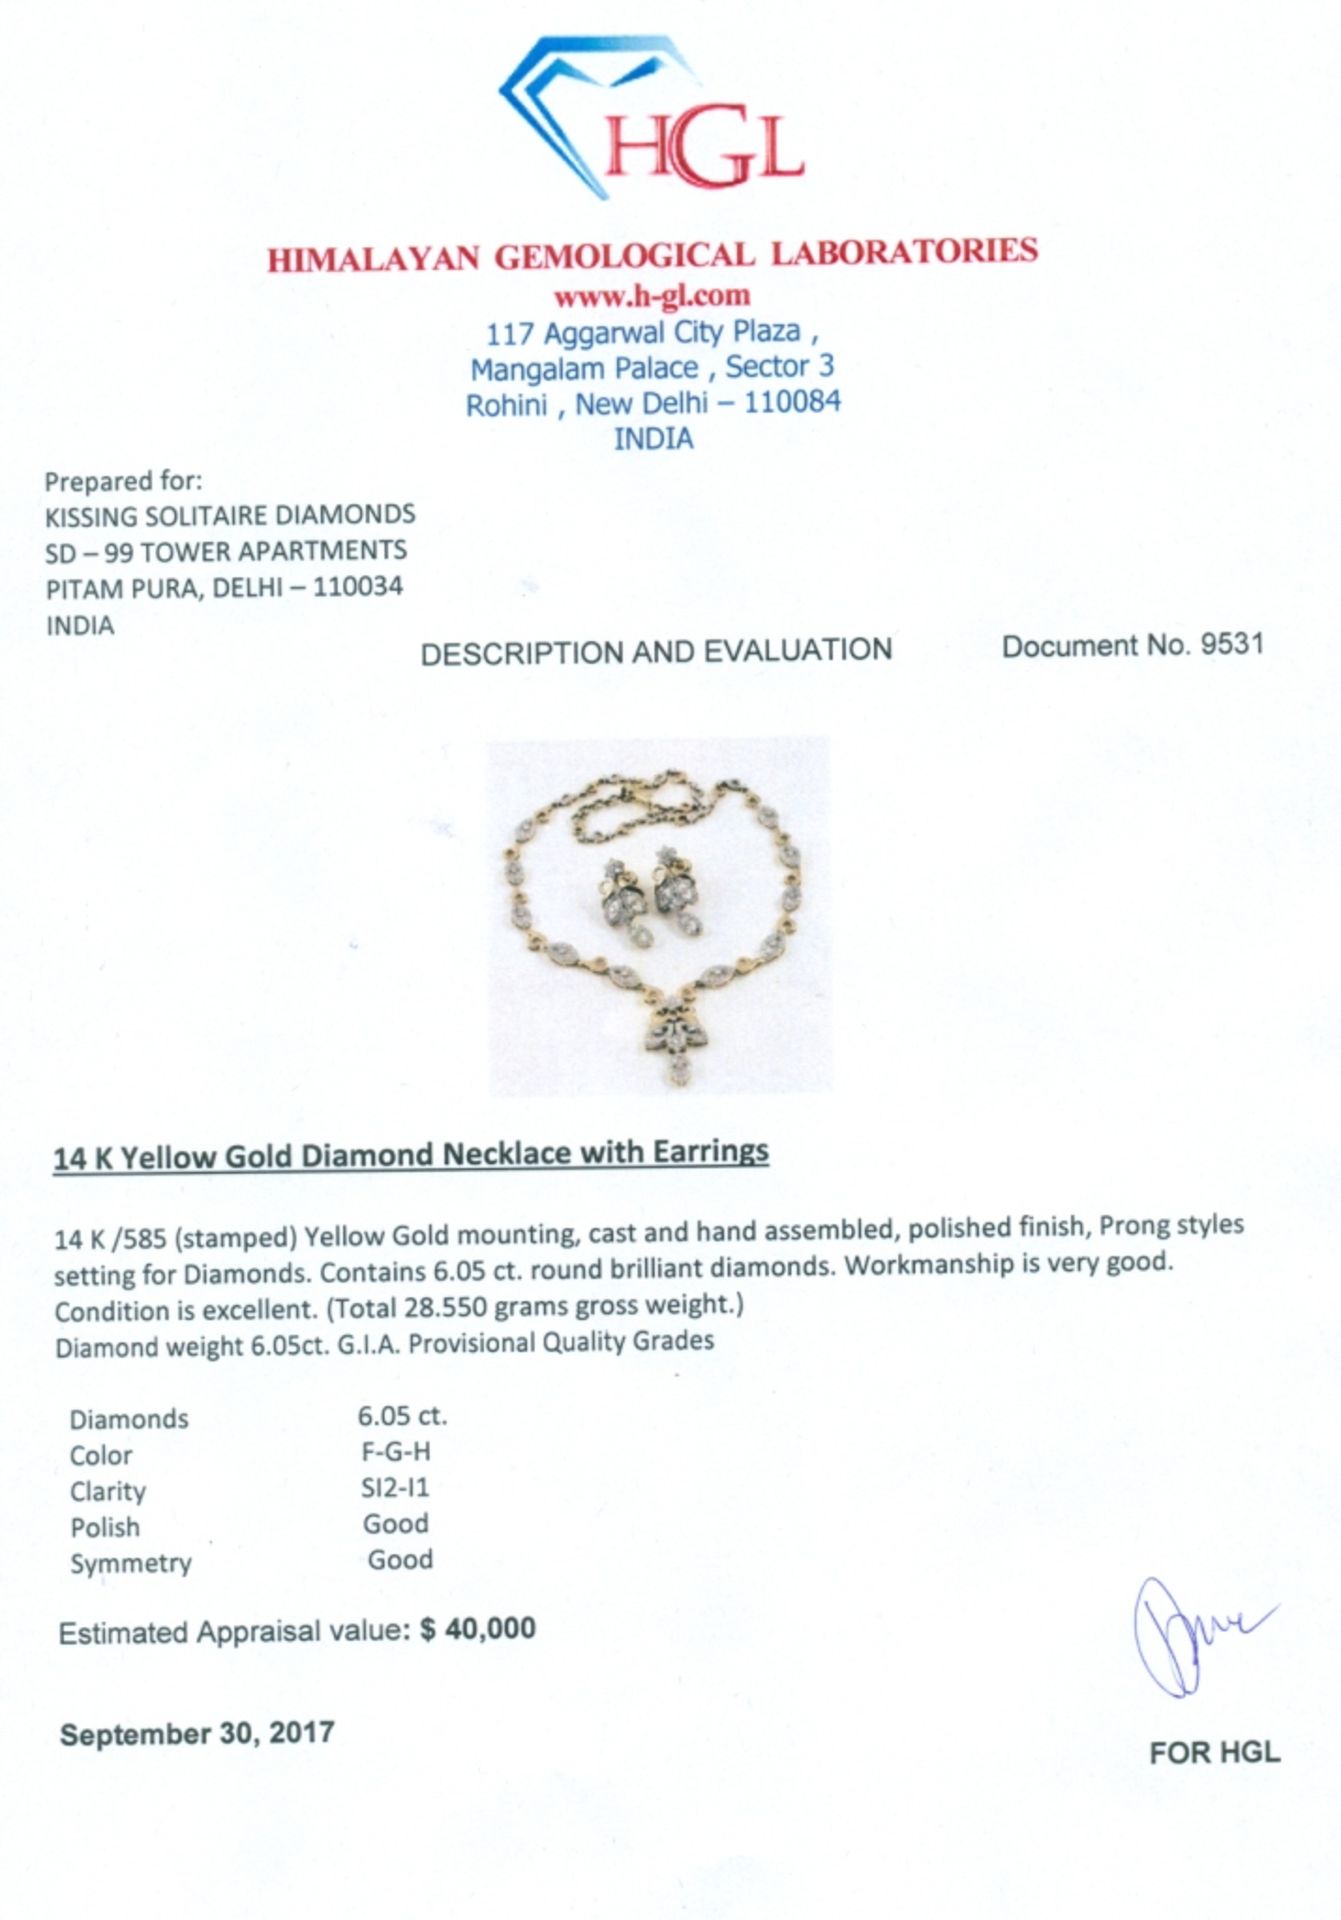 IGI Certified 14 K / 585 Yellow Gold Diamond Necklace with Diamond Earrings - Image 9 of 10